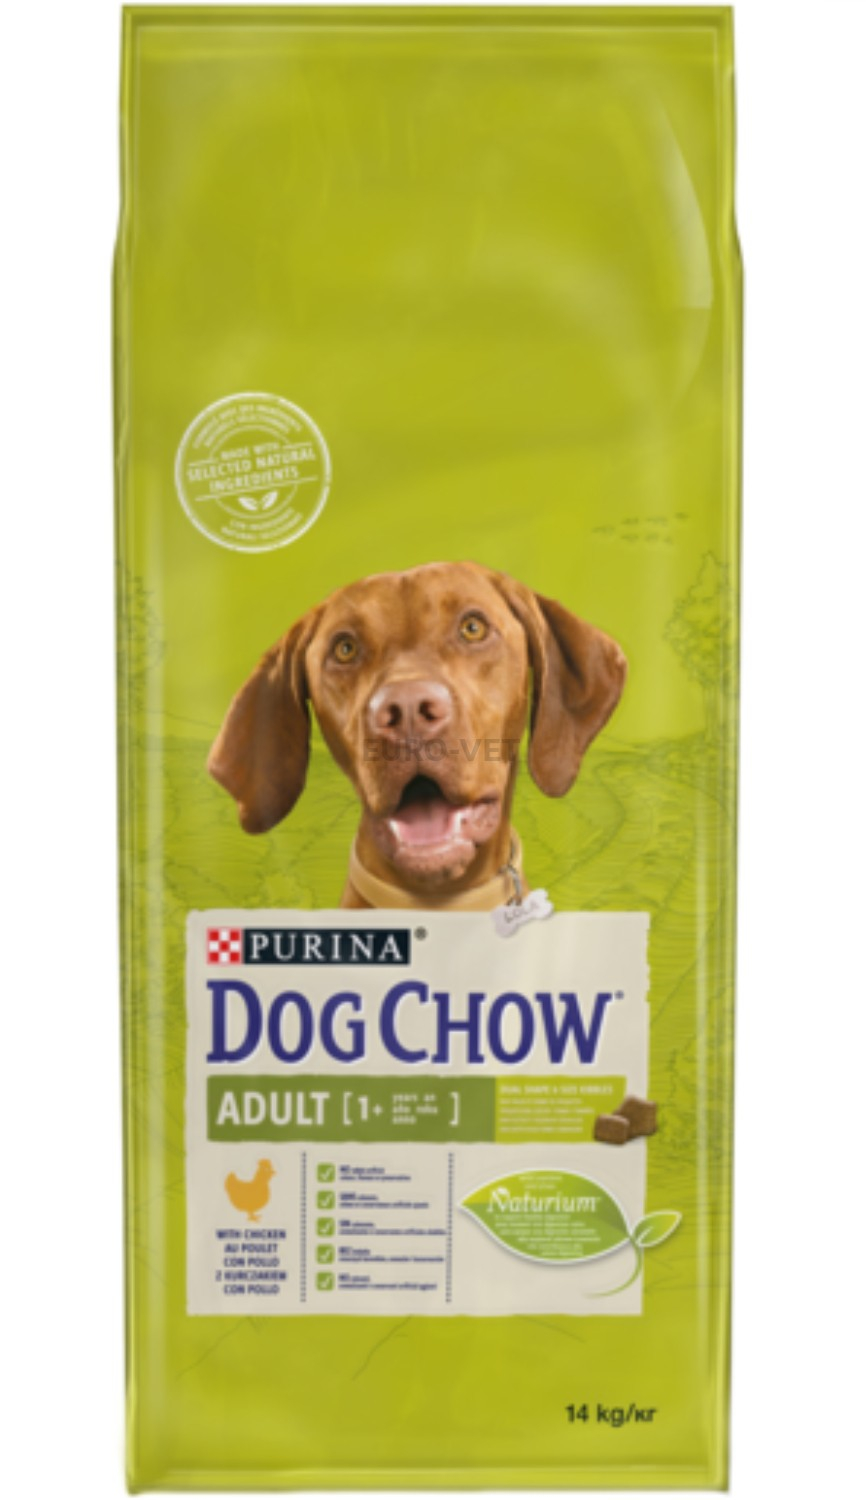 DOG CHOW Adult - met kip